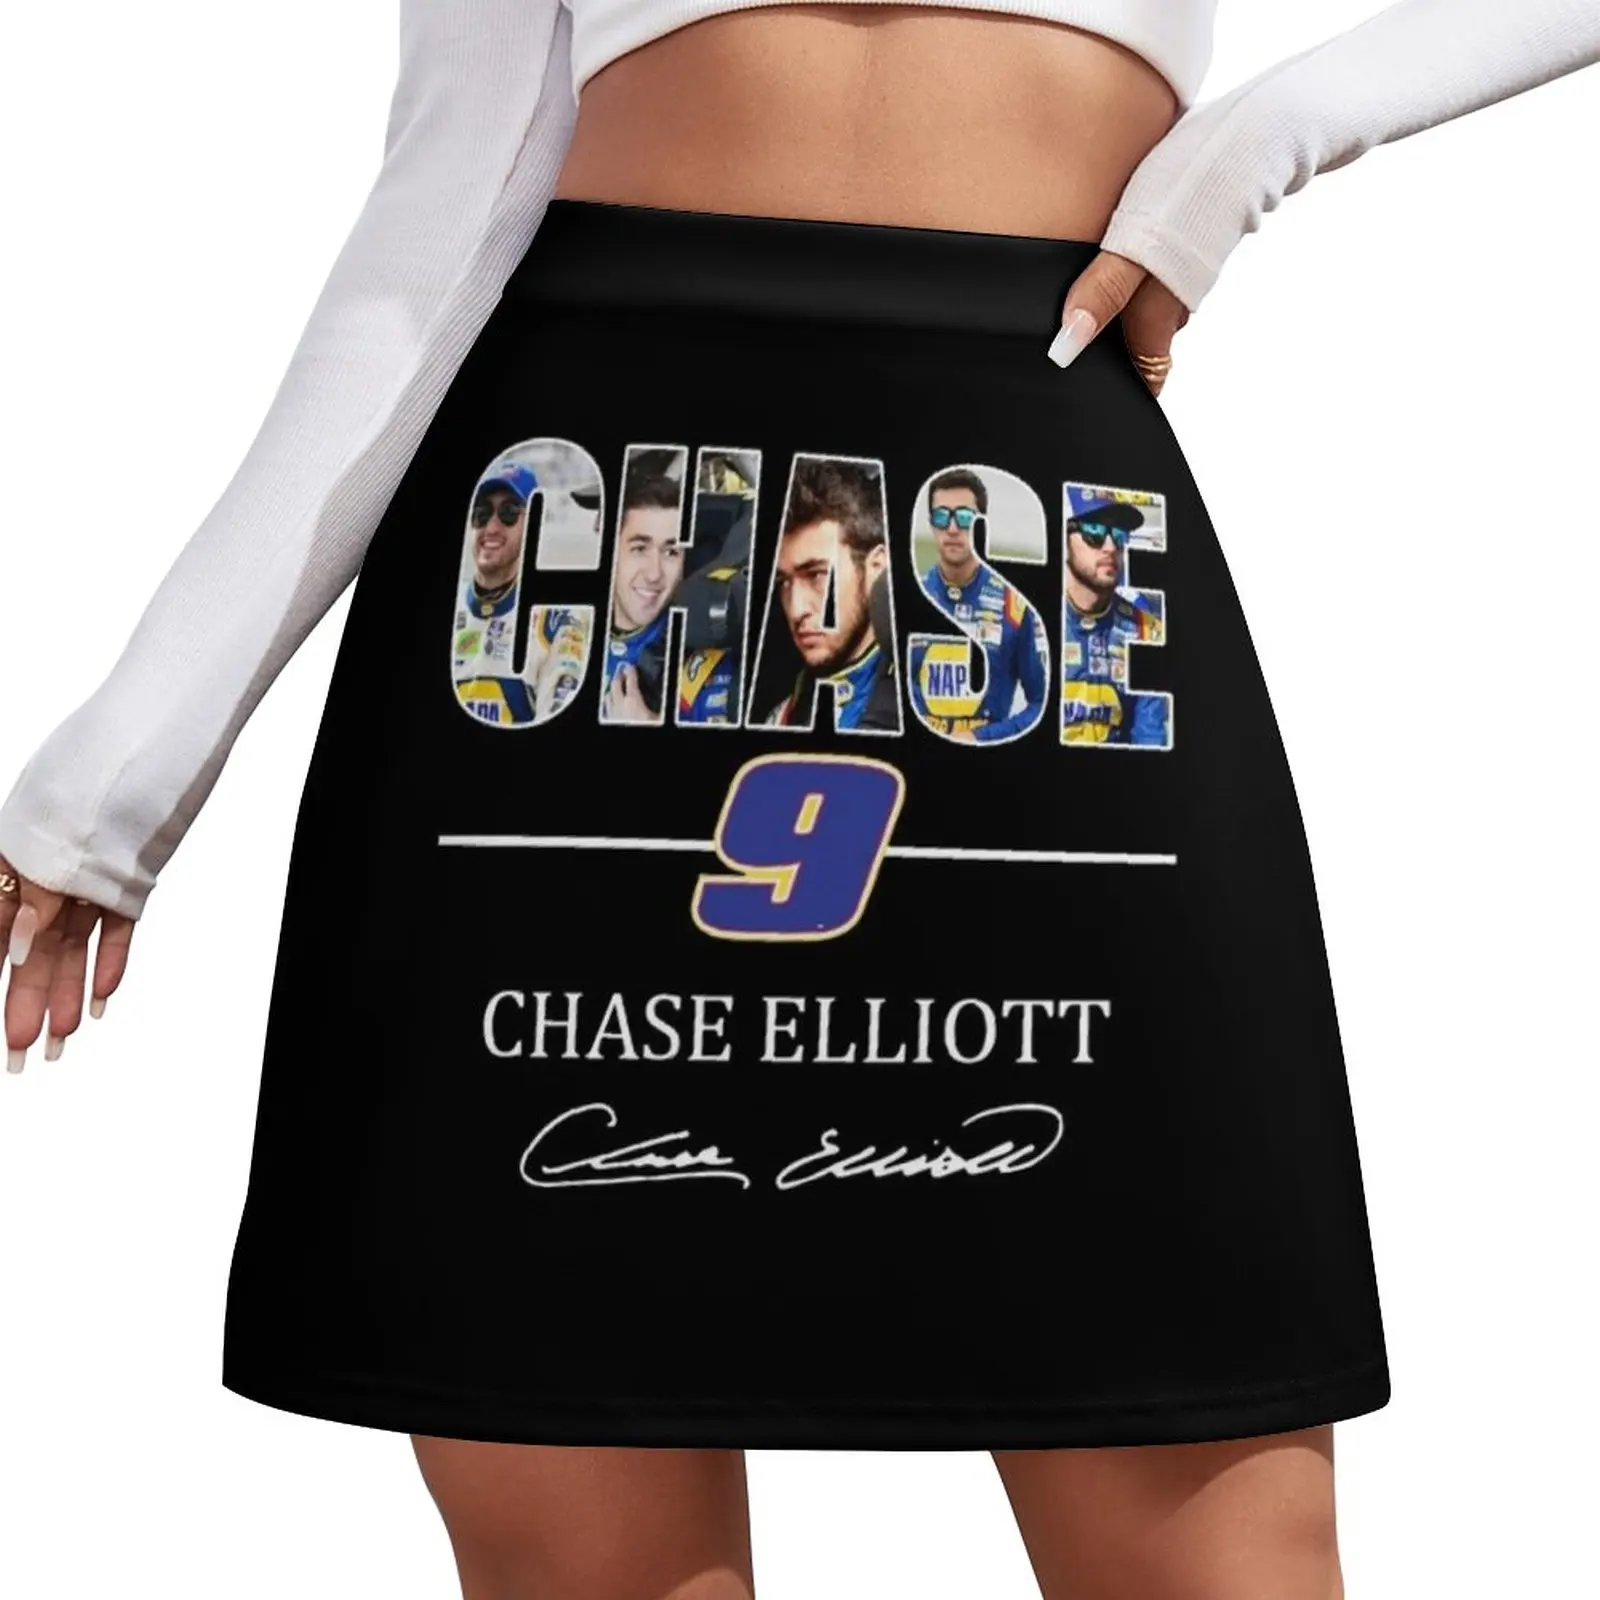 Chase 9 Chase Elliott Signature Gifts For Fans, For Men and Women, Gift Christmas Day Mini Skirt cute skirt